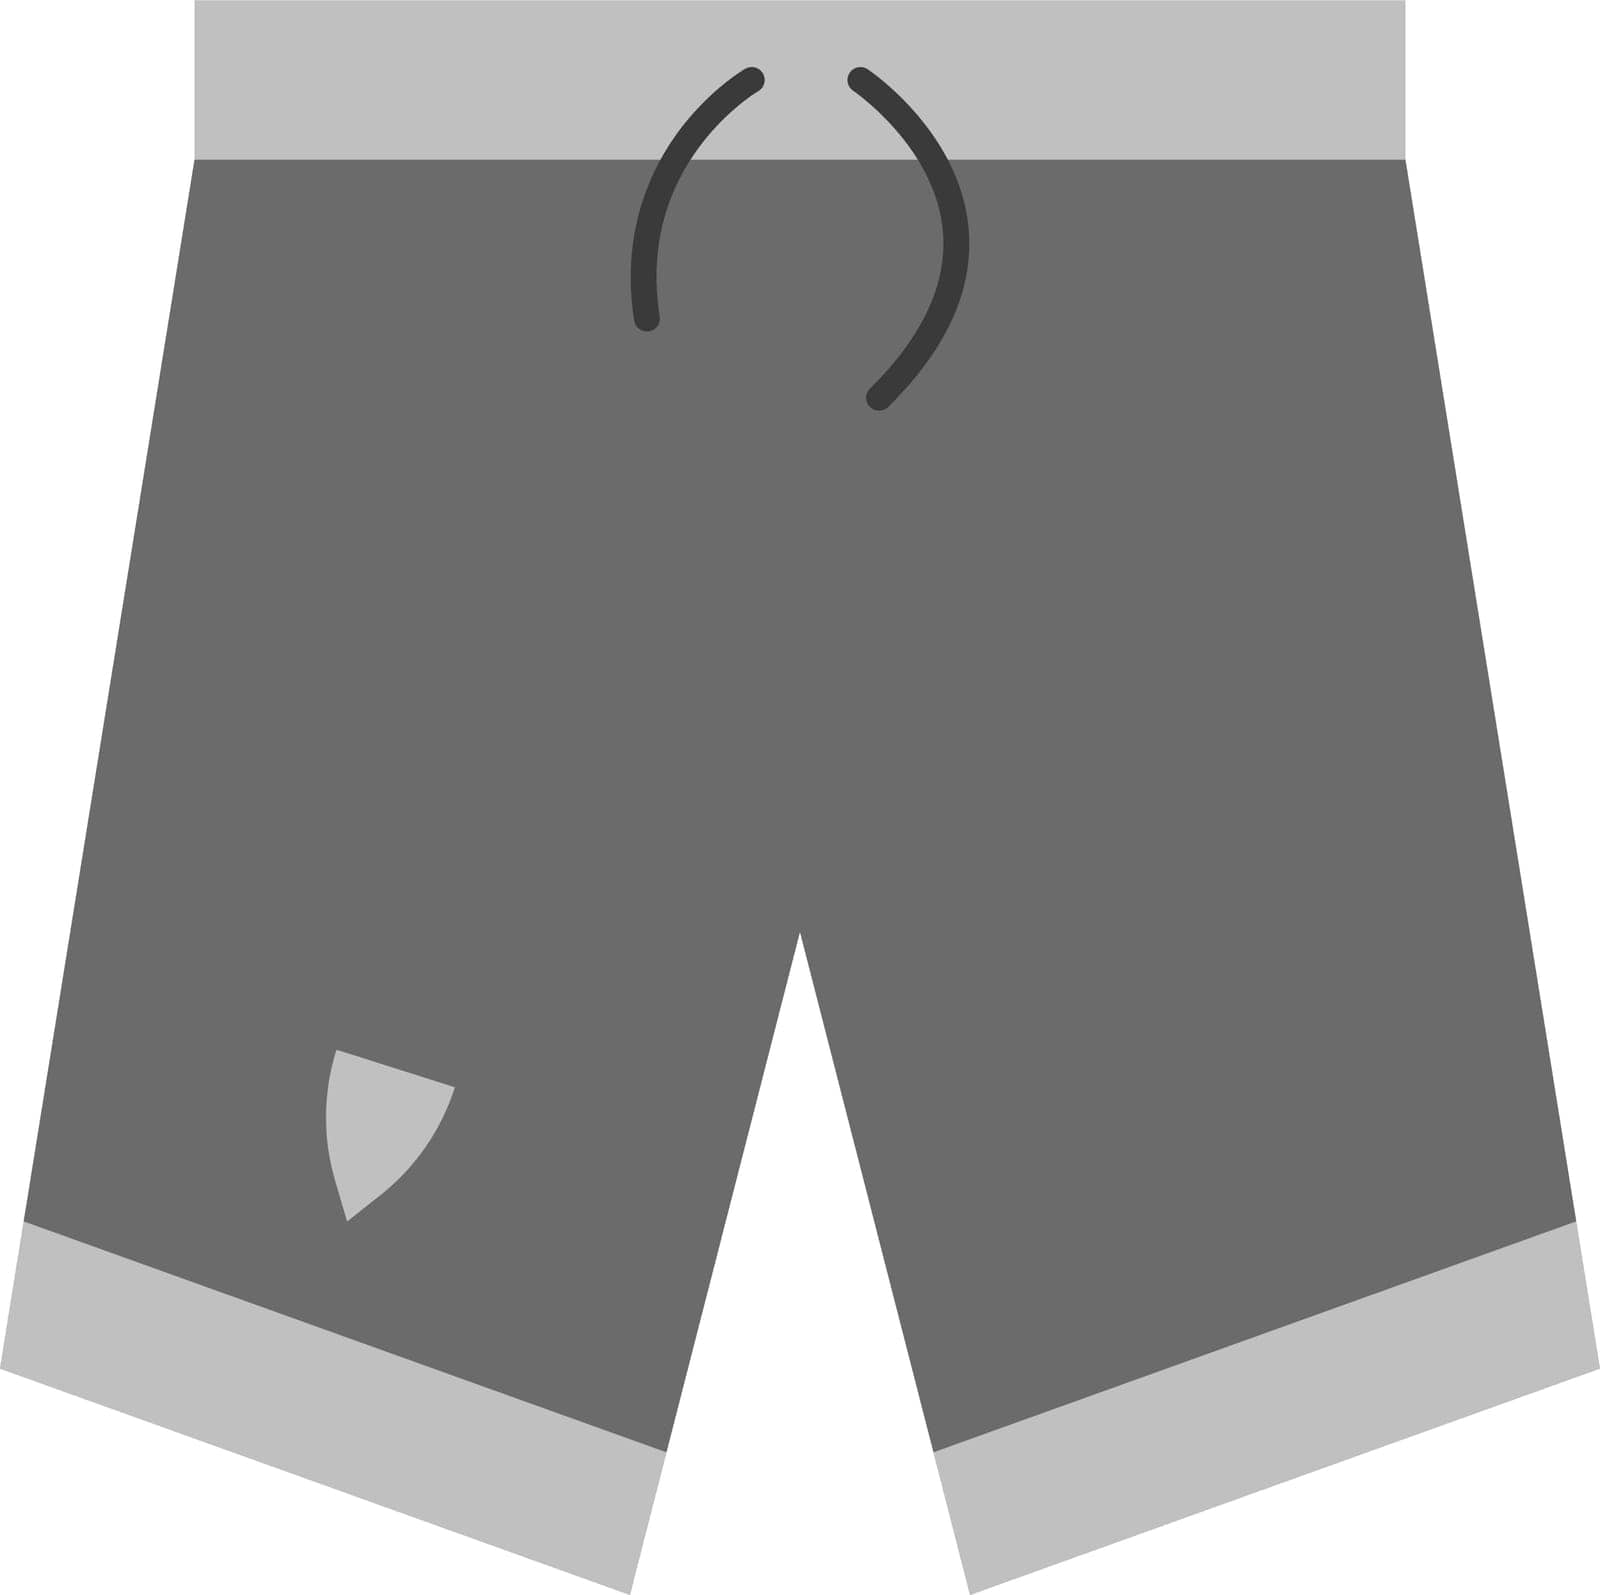 Shorts icon vector image. by ICONBUNNY